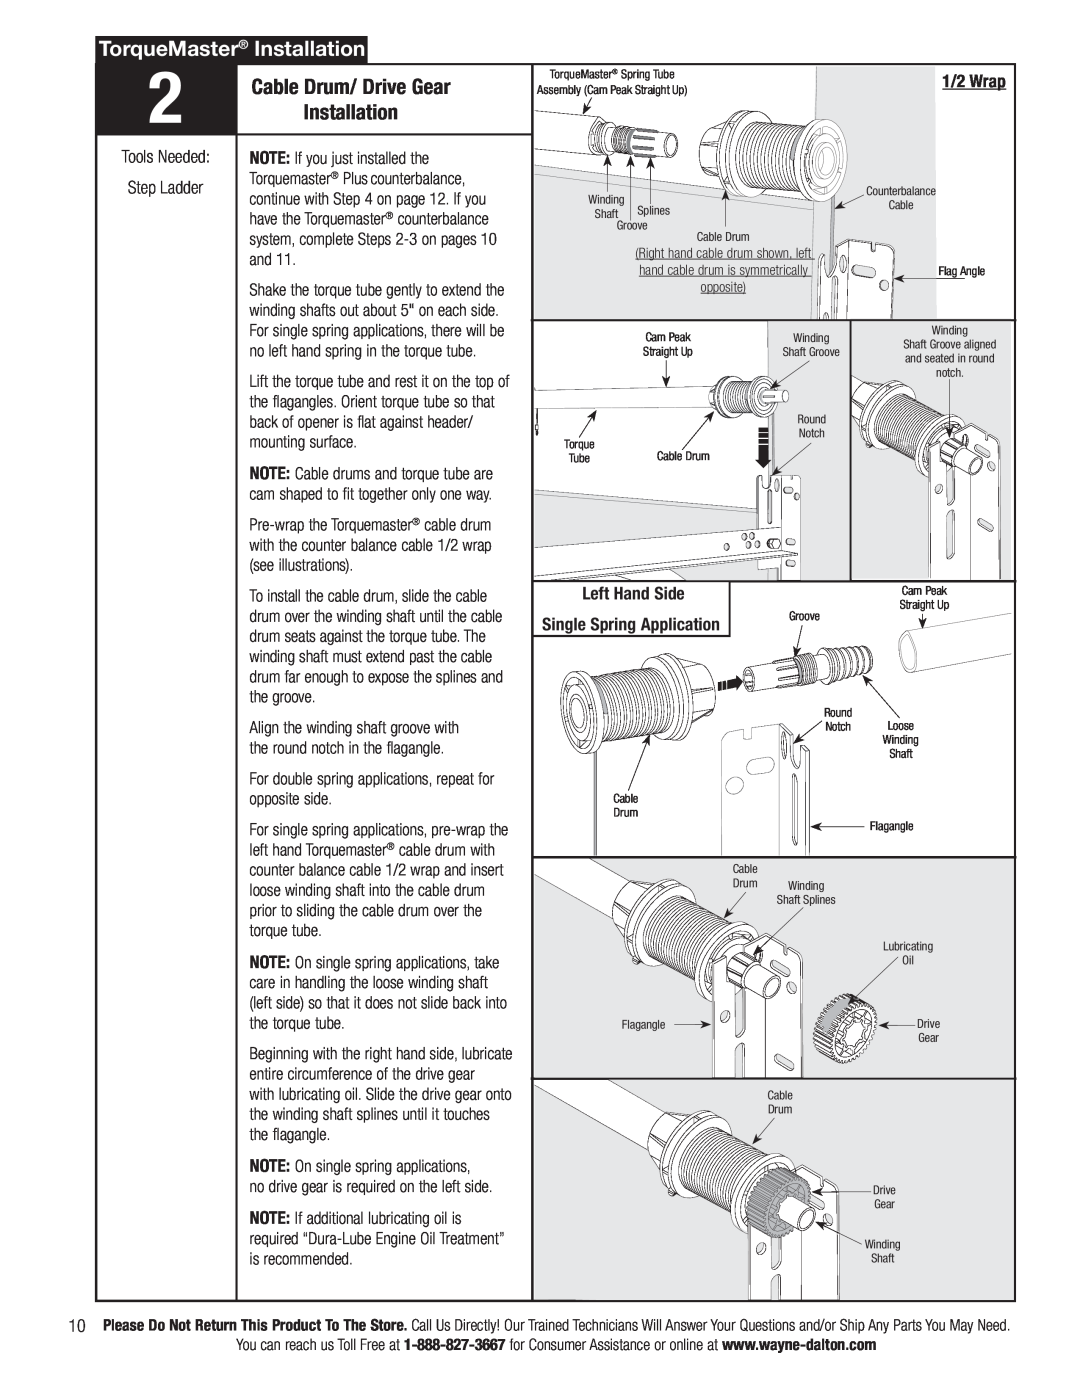 Wayne-Dalton 3790-Z installation instructions TorqueMaster Installation, Cable Drum/ Drive Gear 